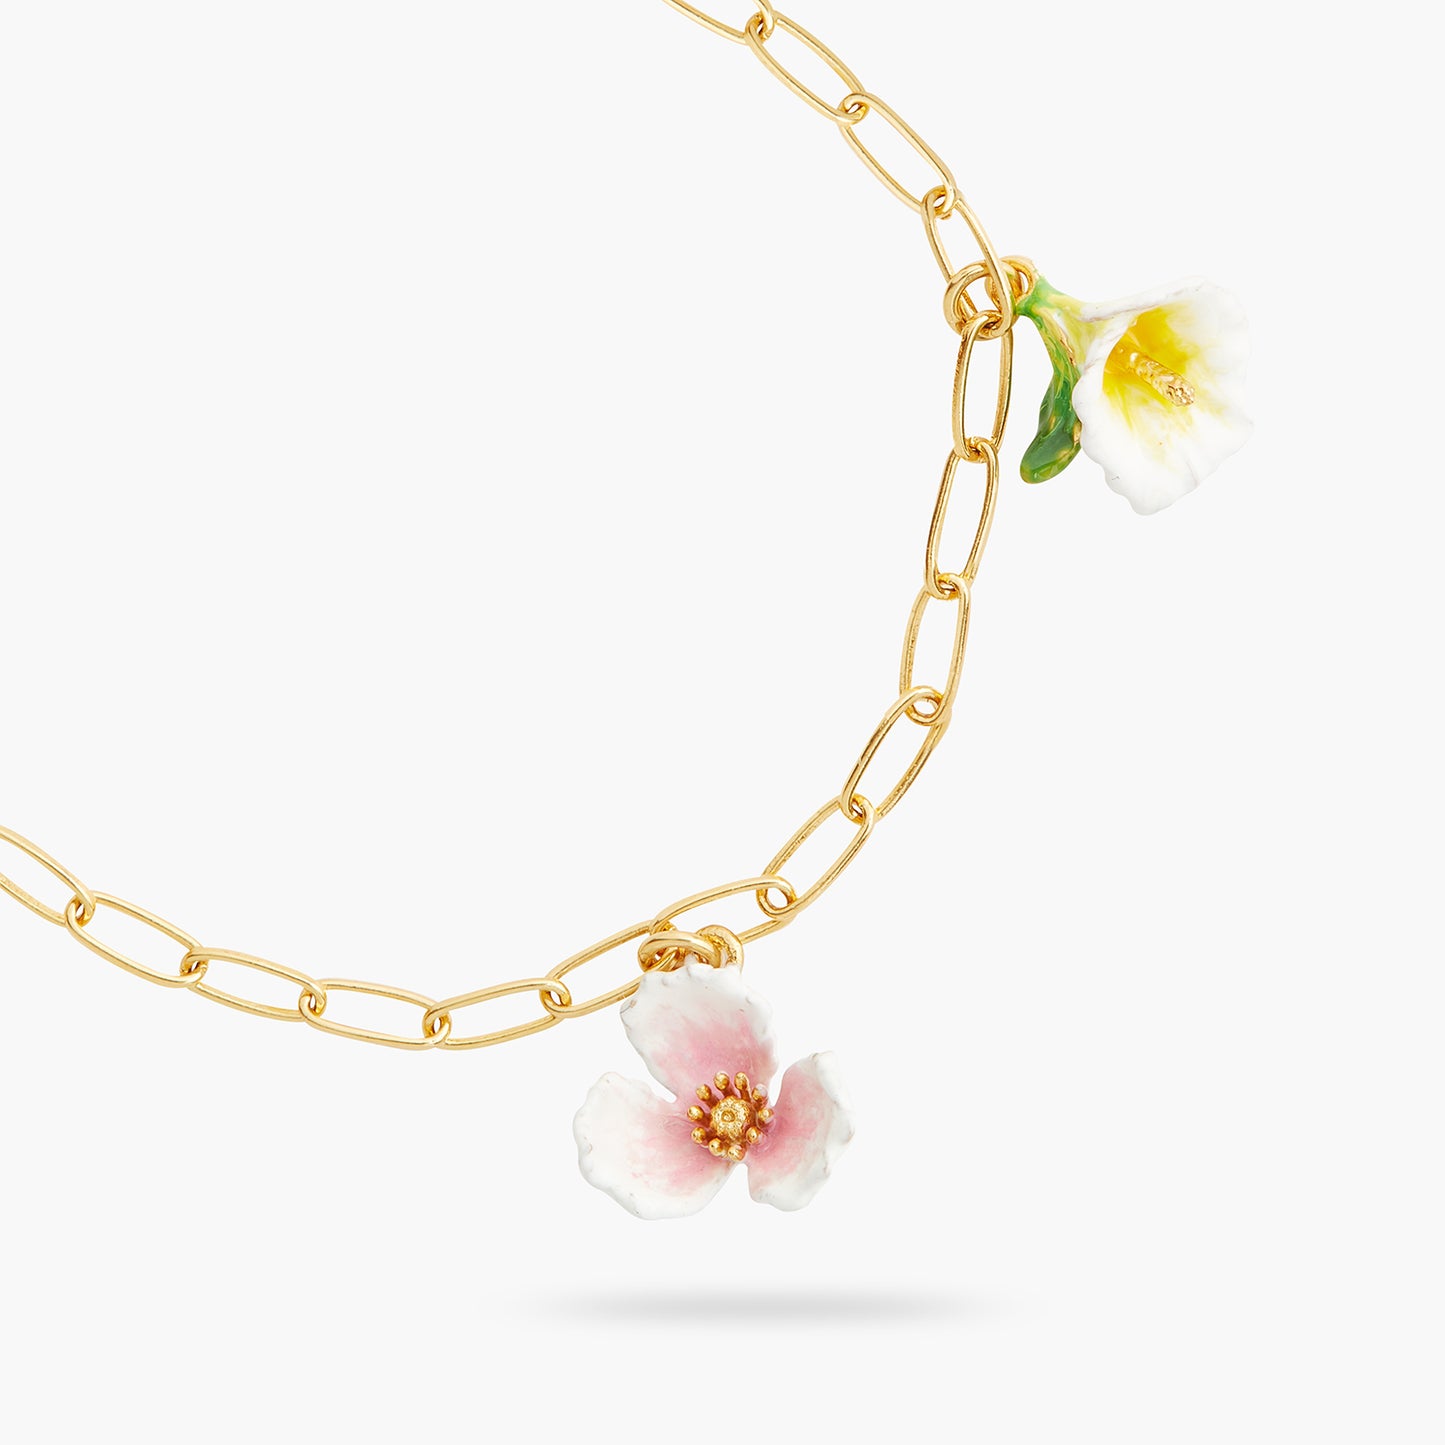 Gold-Plated Links And Flower Pendant Bracelet | AQJF2021